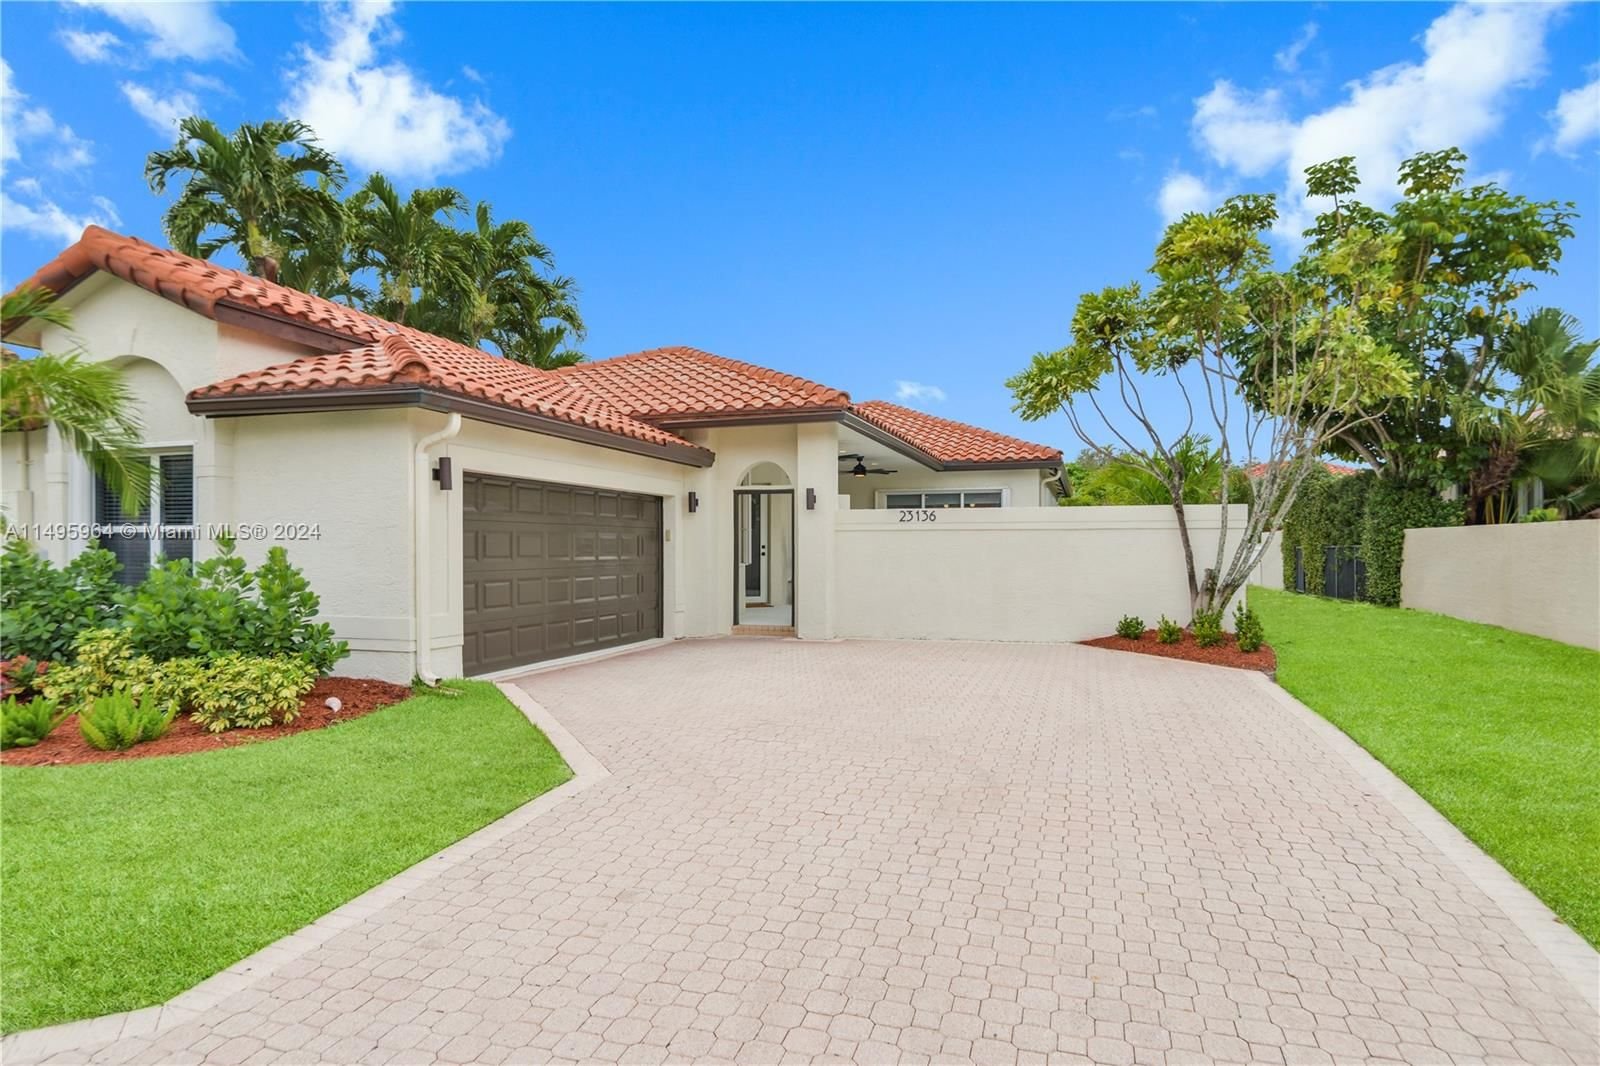 Real estate property located at 23136 Via Stel, Palm Beach County, VILLA STEL, Boca Raton, FL